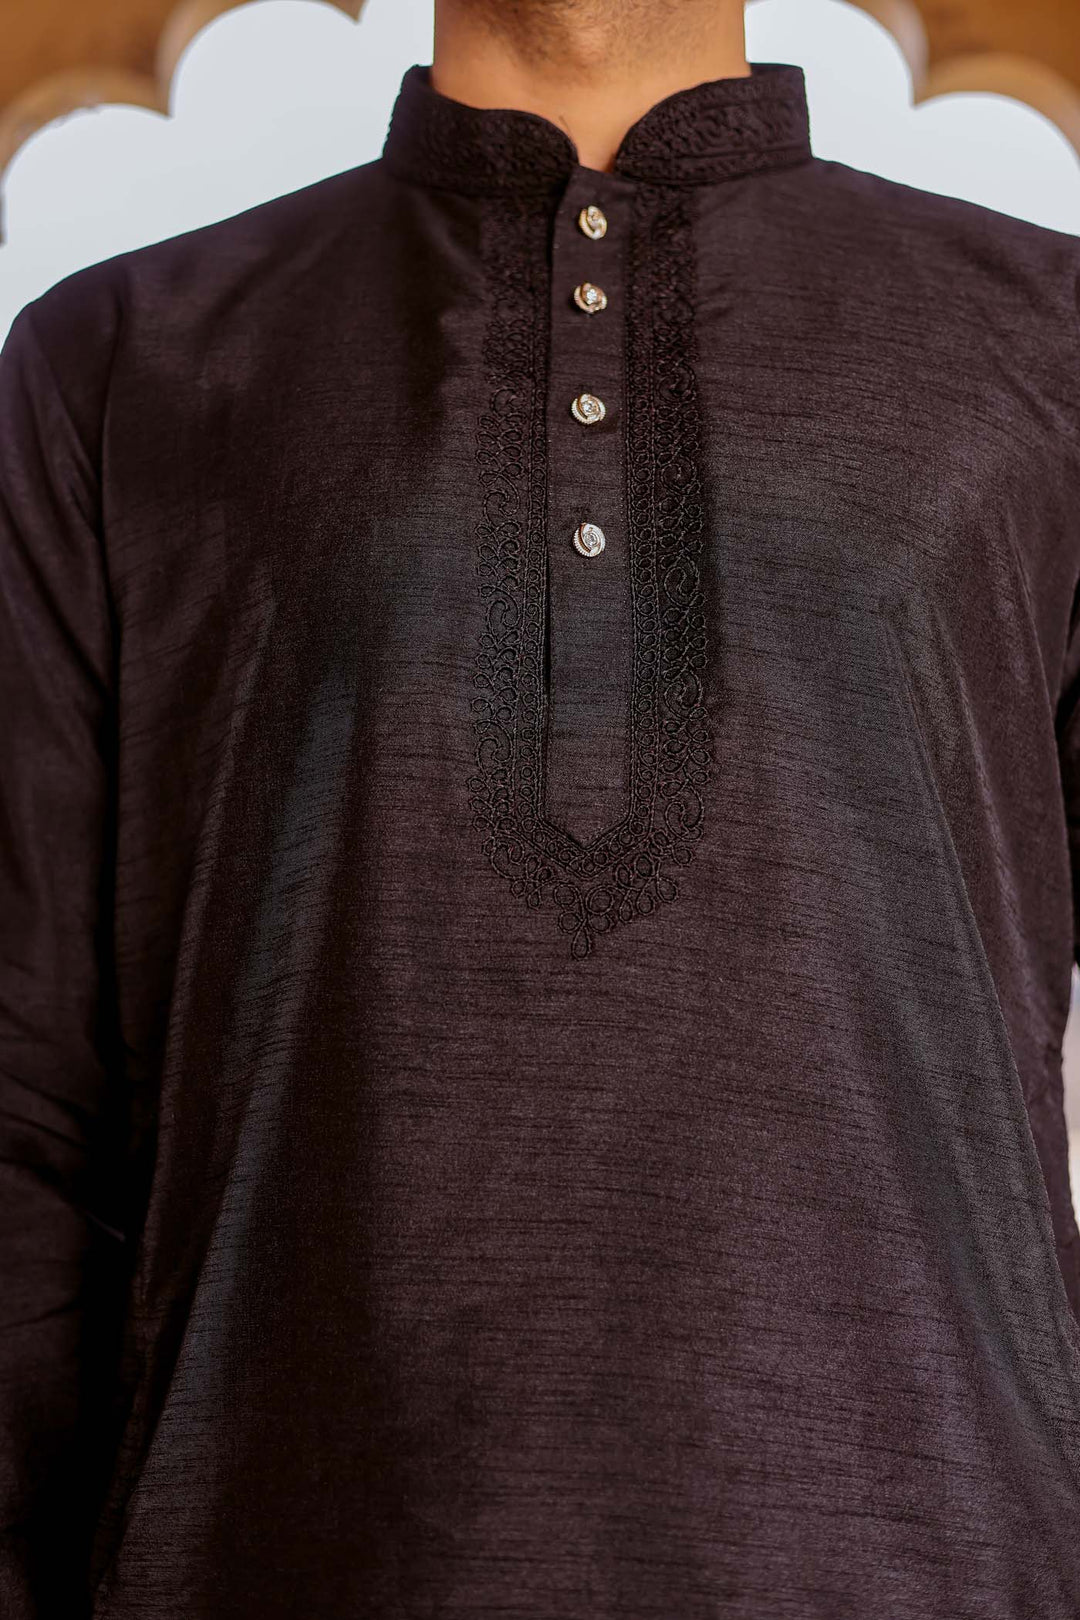 Black Silk Thread Embroidery Kurta Suit.